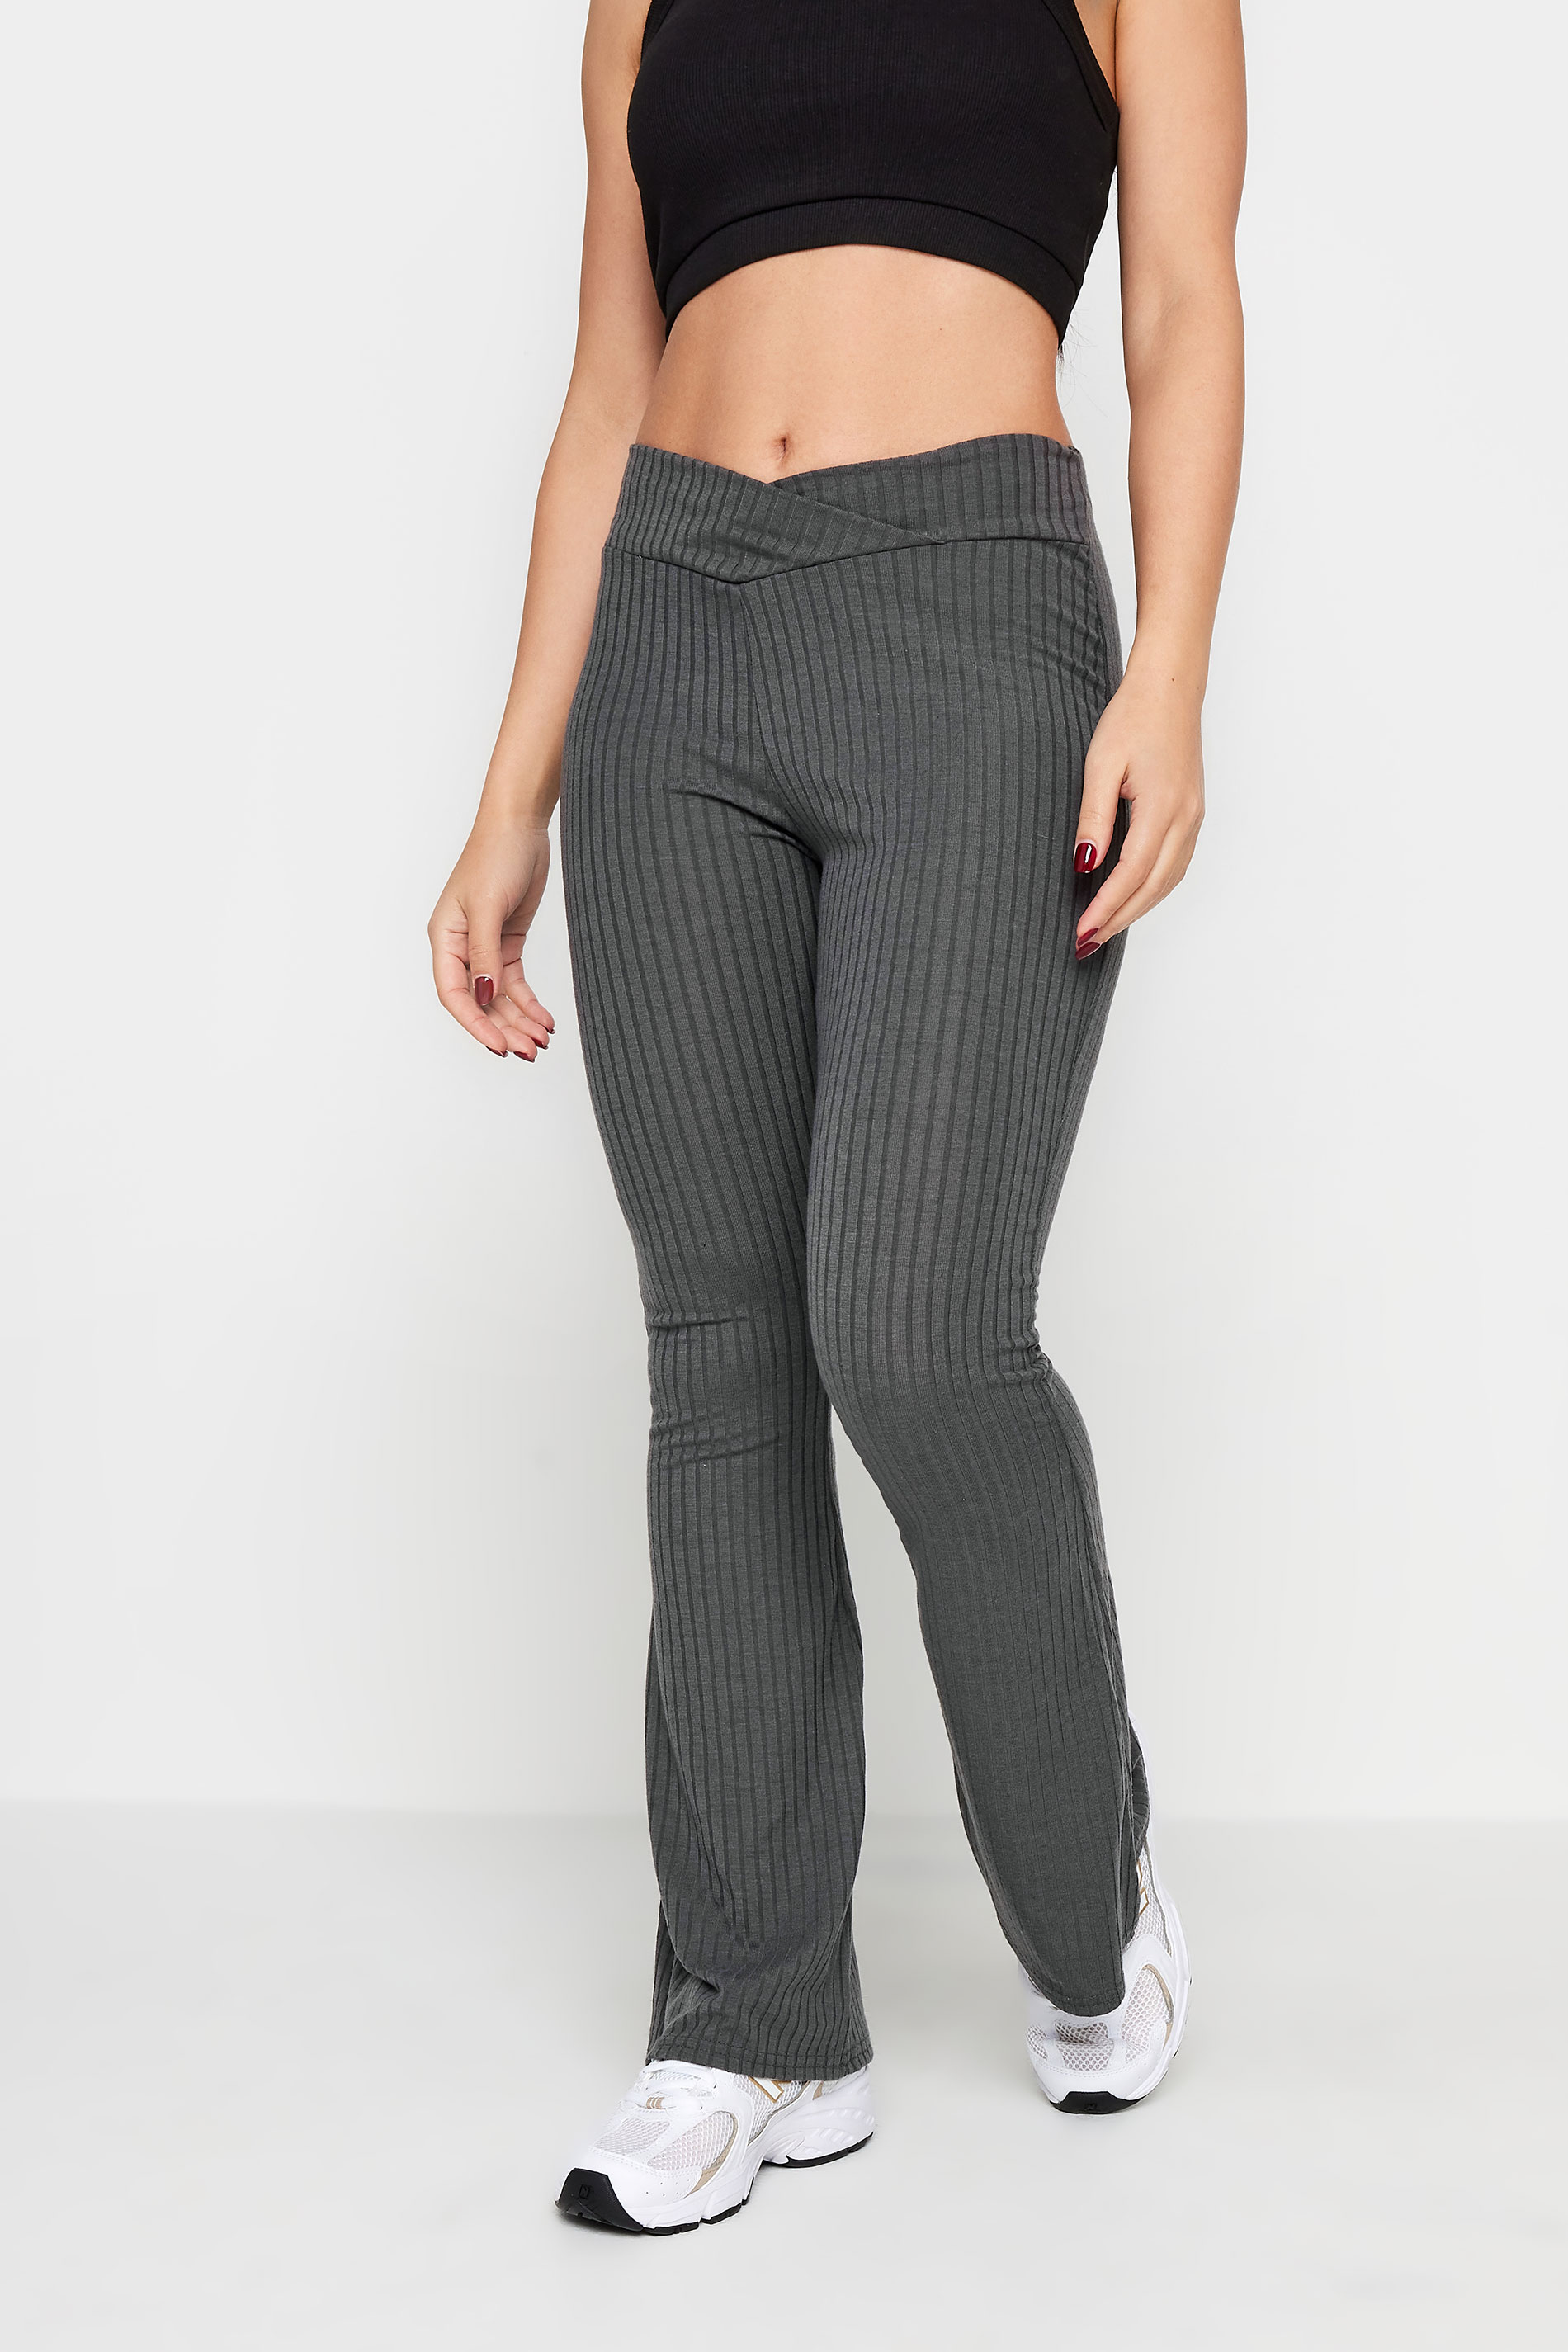 PixieGirl Grey V-Waist Ribbed Flare Trousers | PixieGirl 2